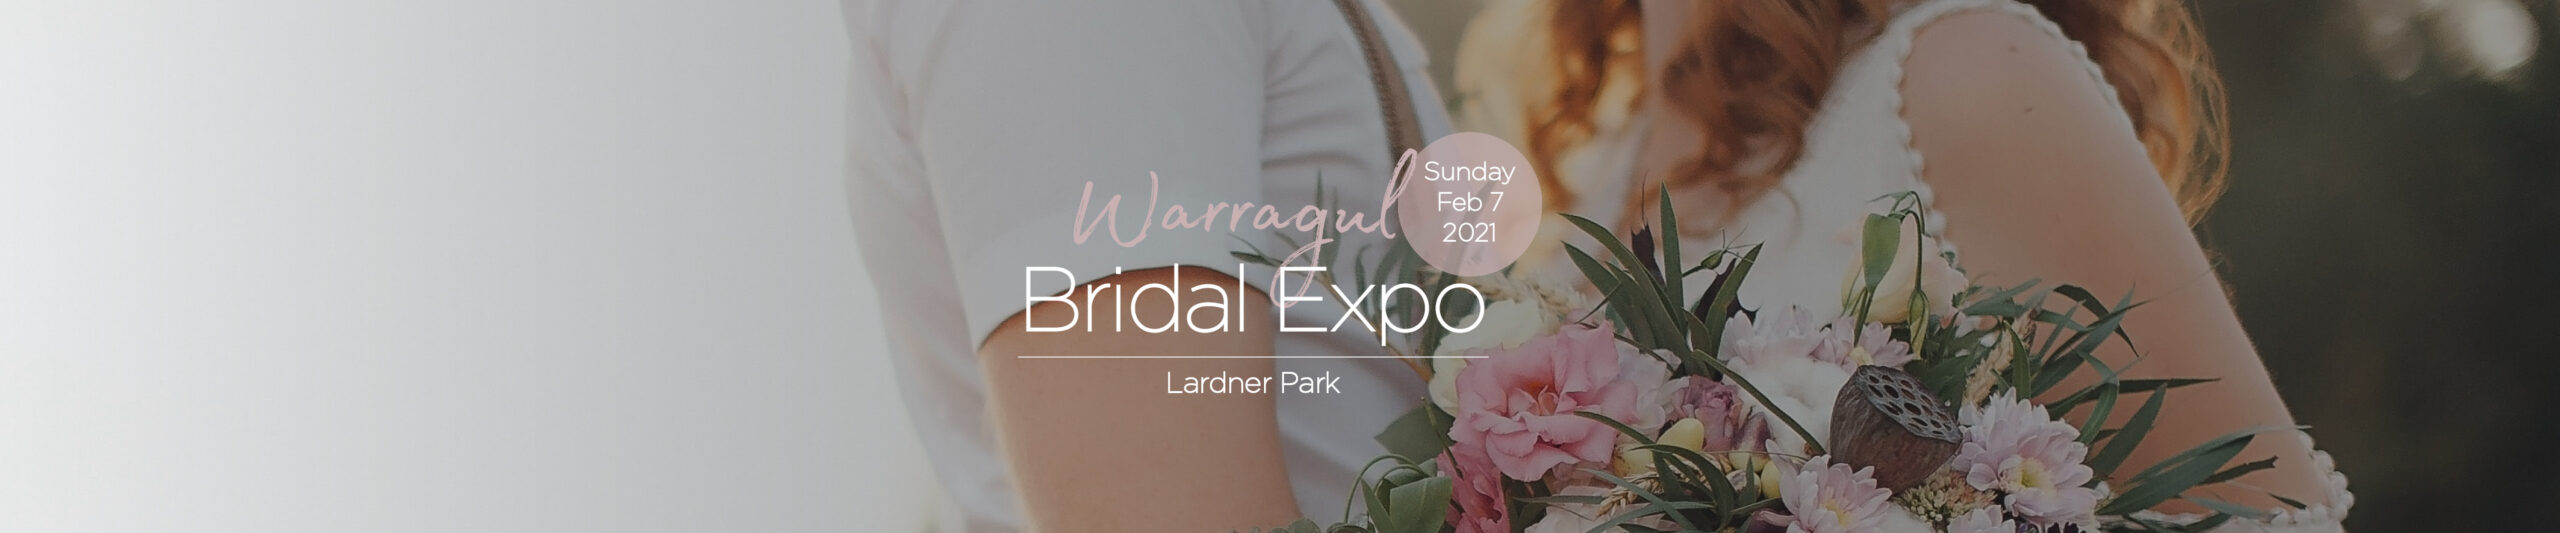 Home Bridal Expos Australia For inspiring brides for 